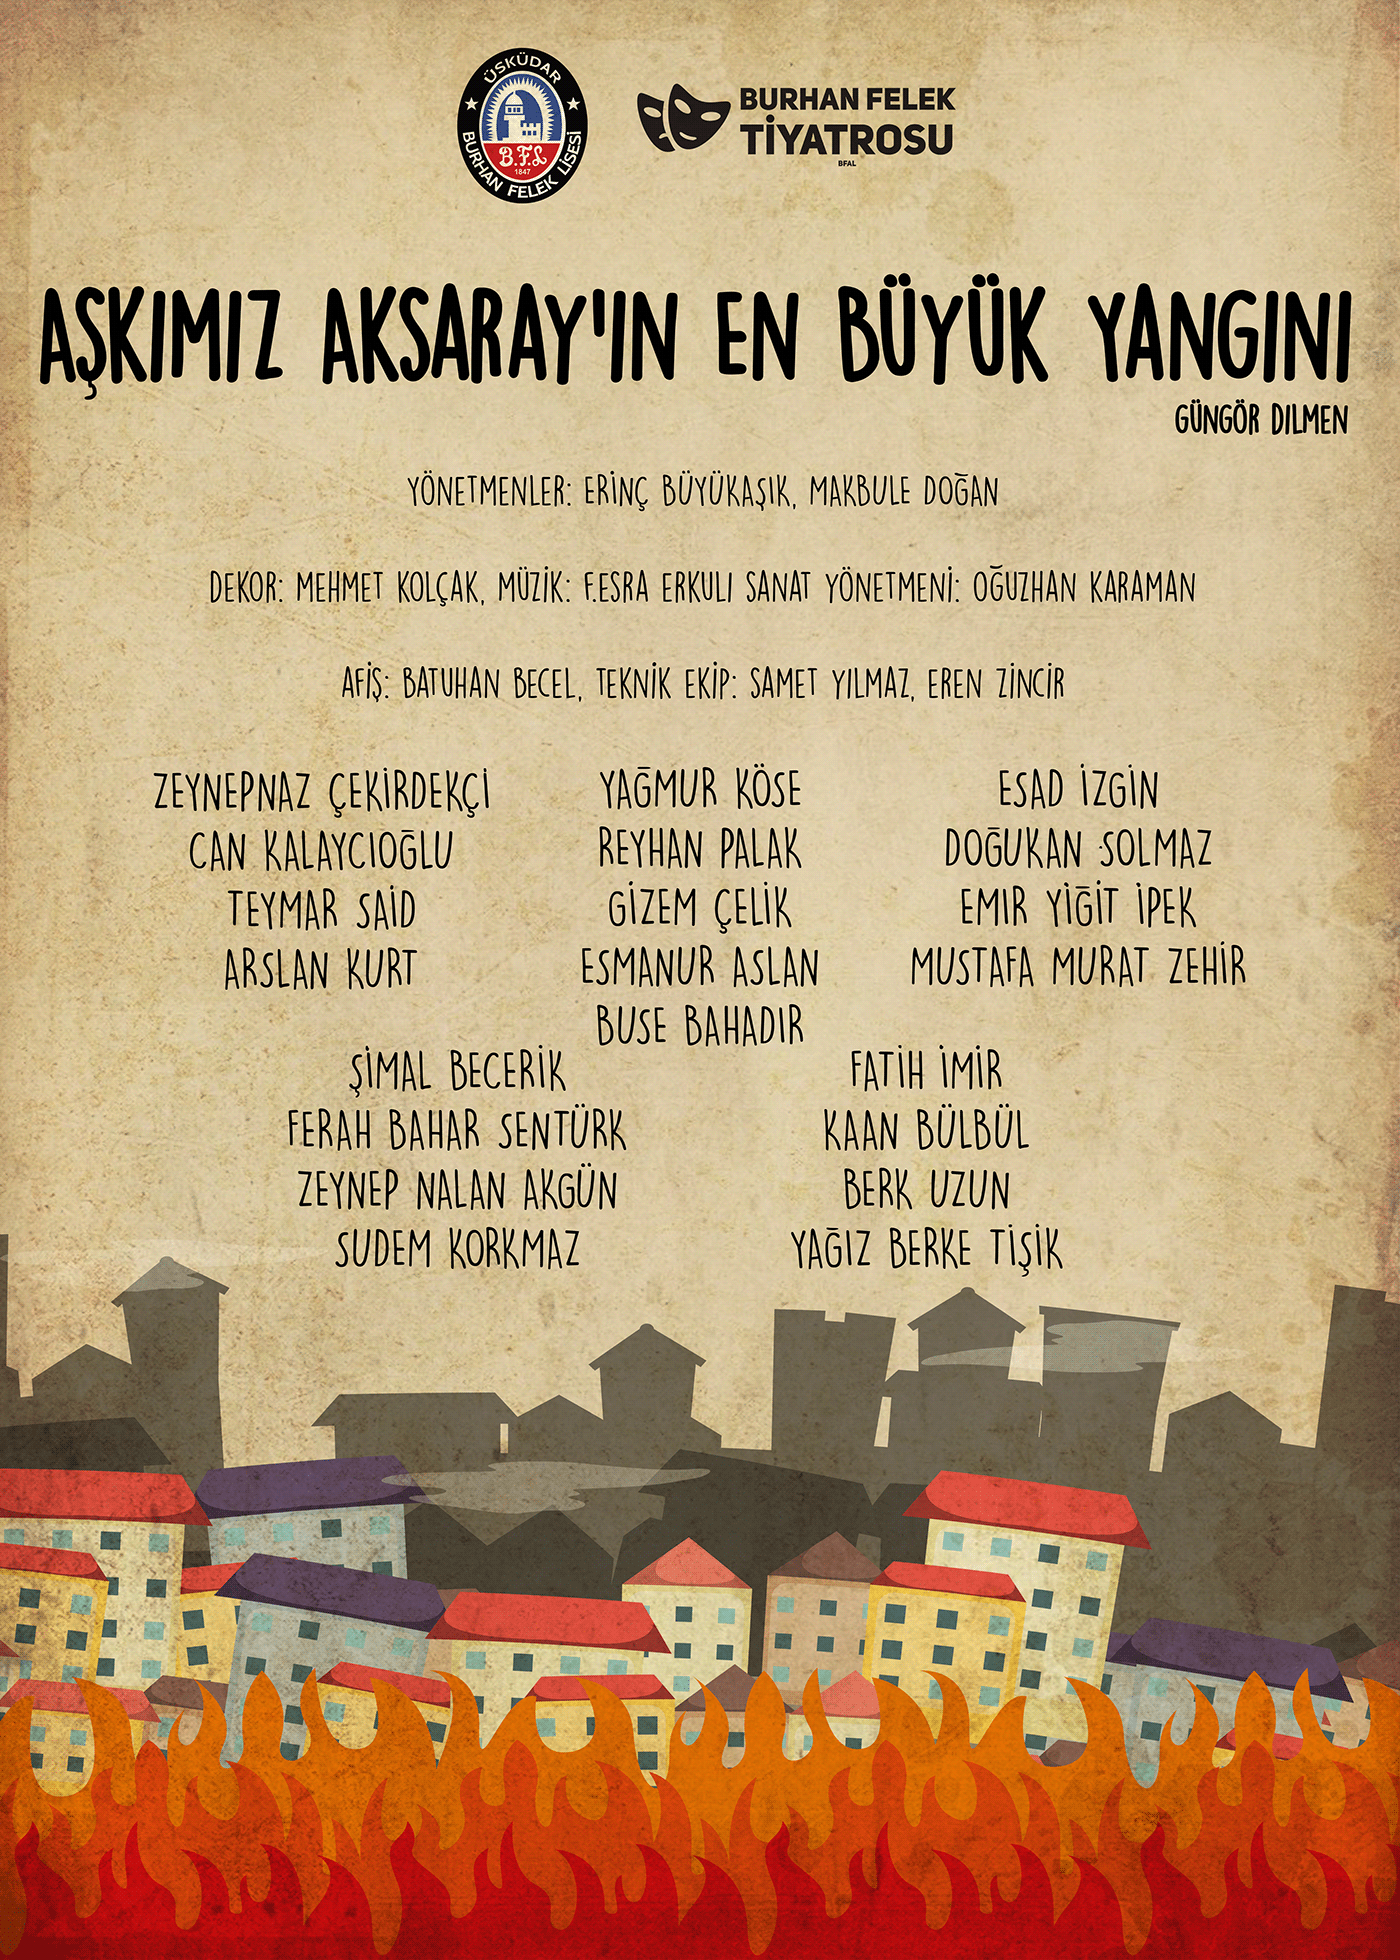 Aksaray banner design poster Theatre